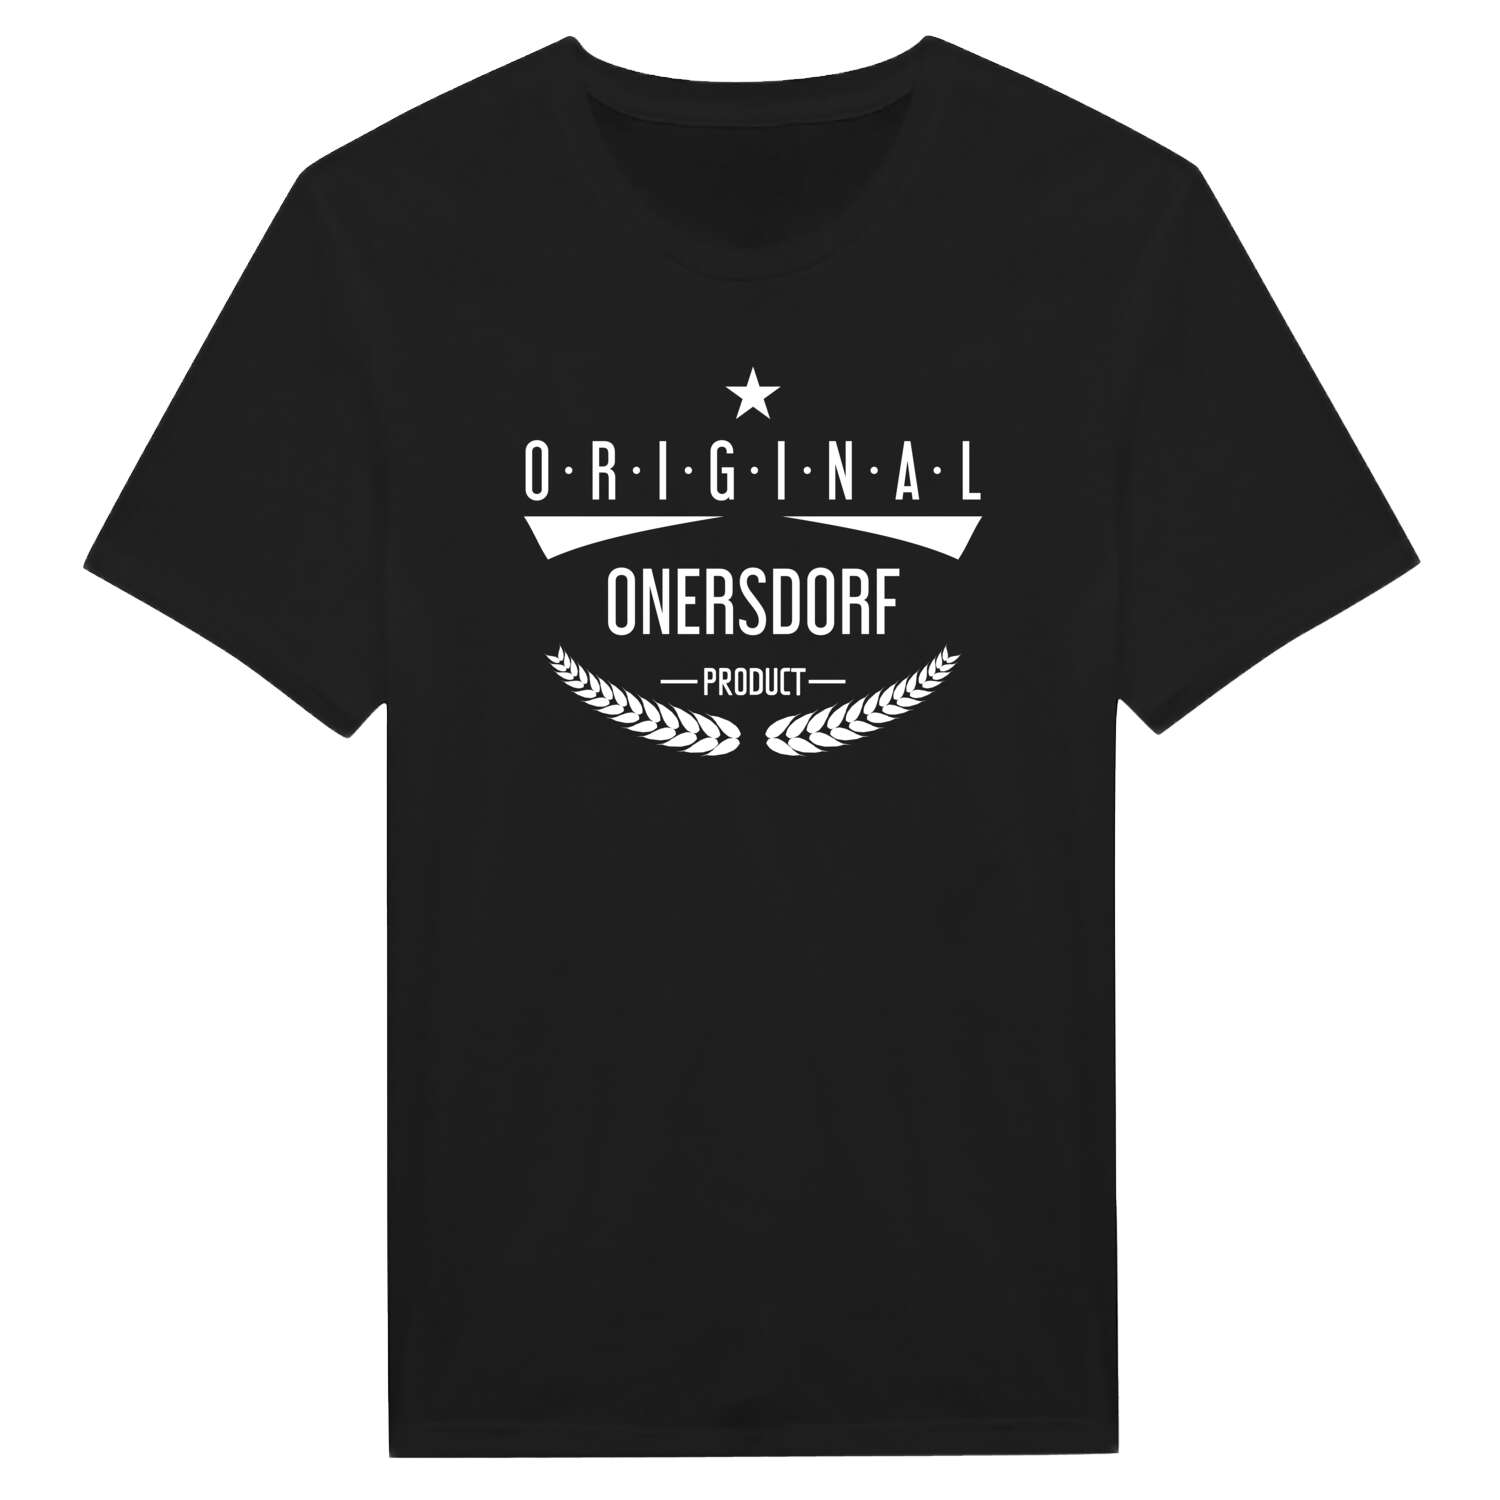 Onersdorf T-Shirt »Original Product«